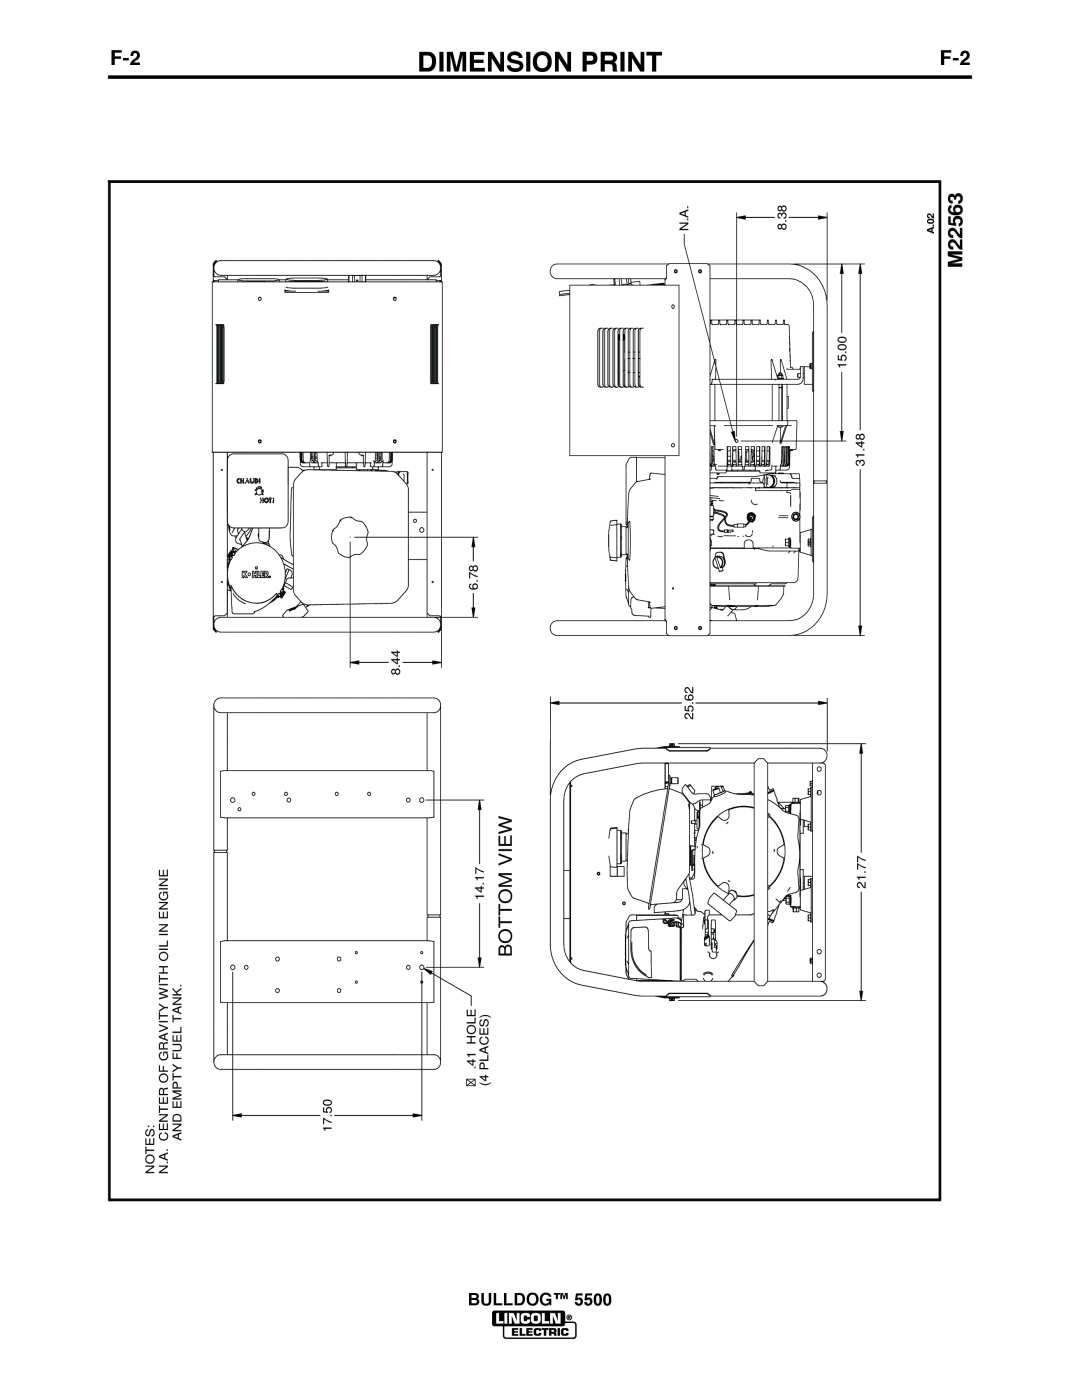 Lincoln Electric IM10074 manual Dimension Print, M22563, Bottom View, bULLDOG 